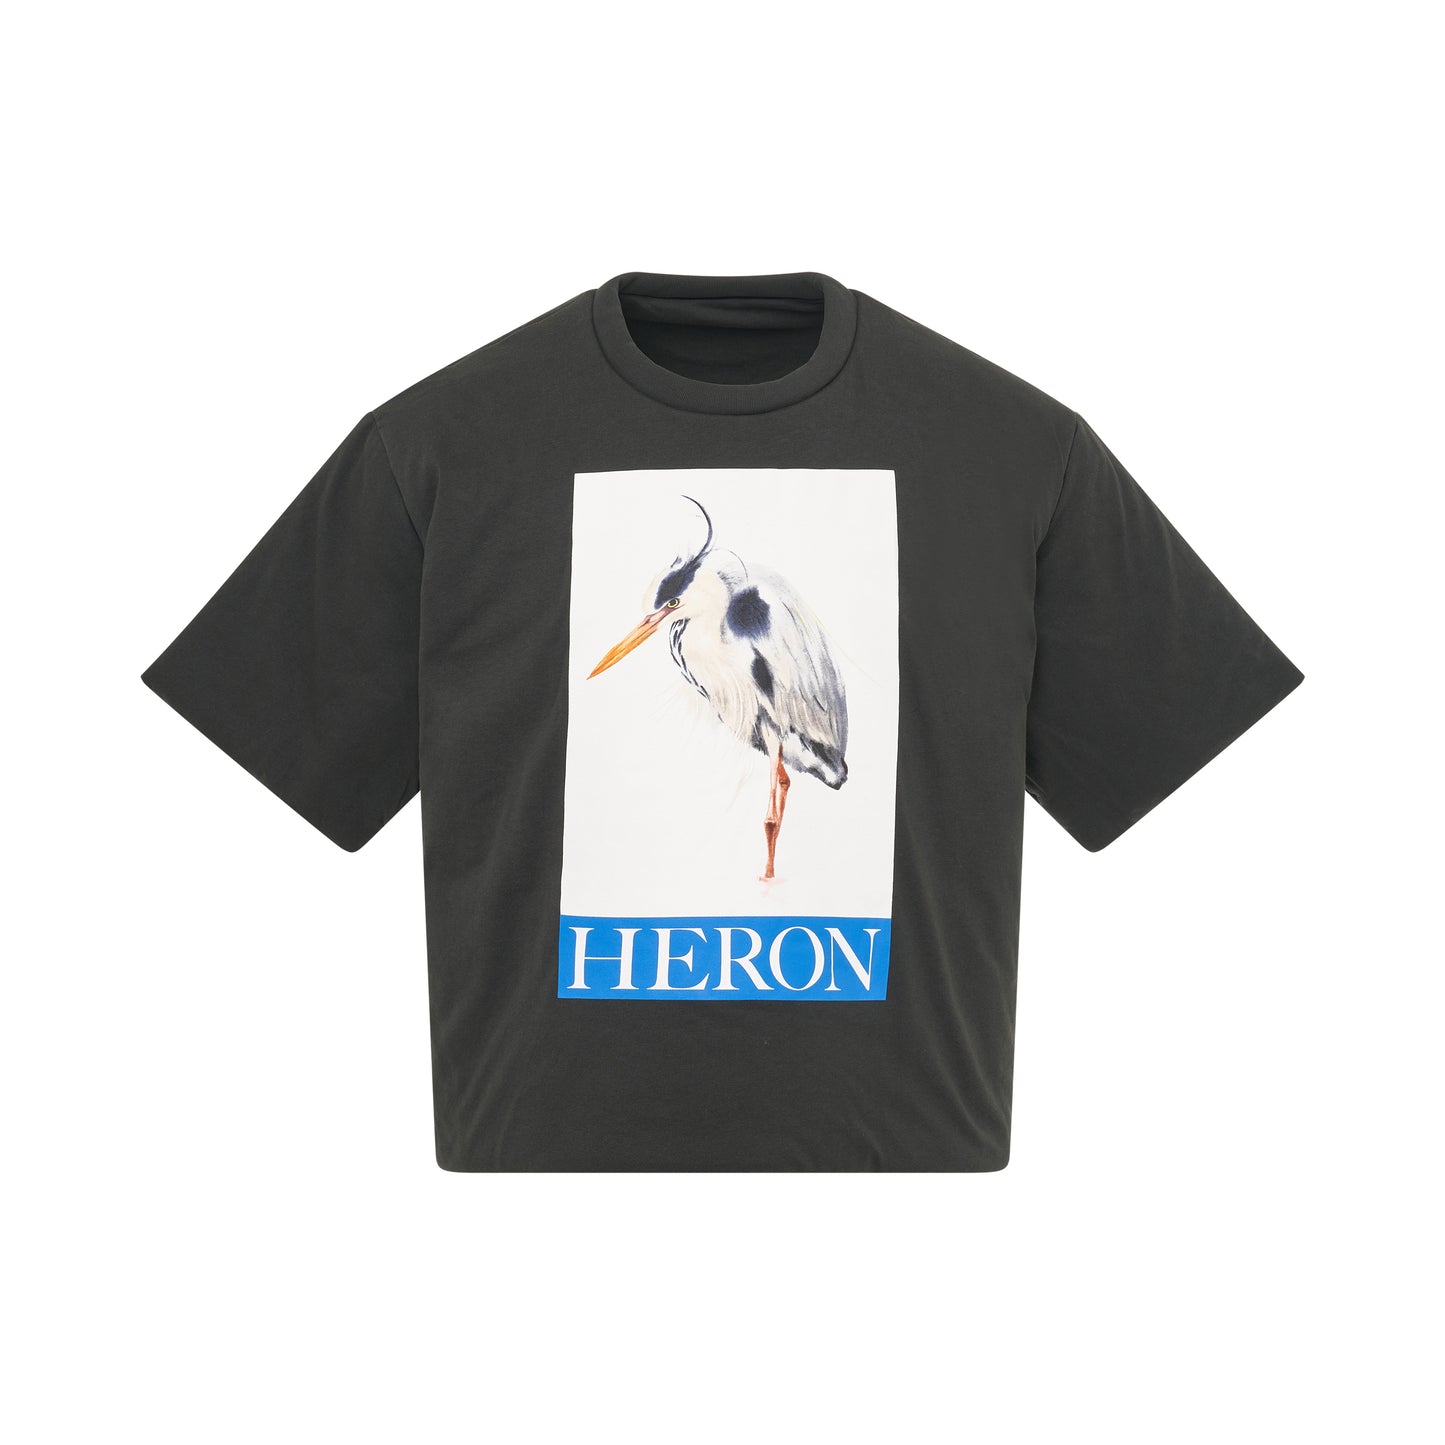 Heron Bird Painted Padded T-Shirt in Black/Blue